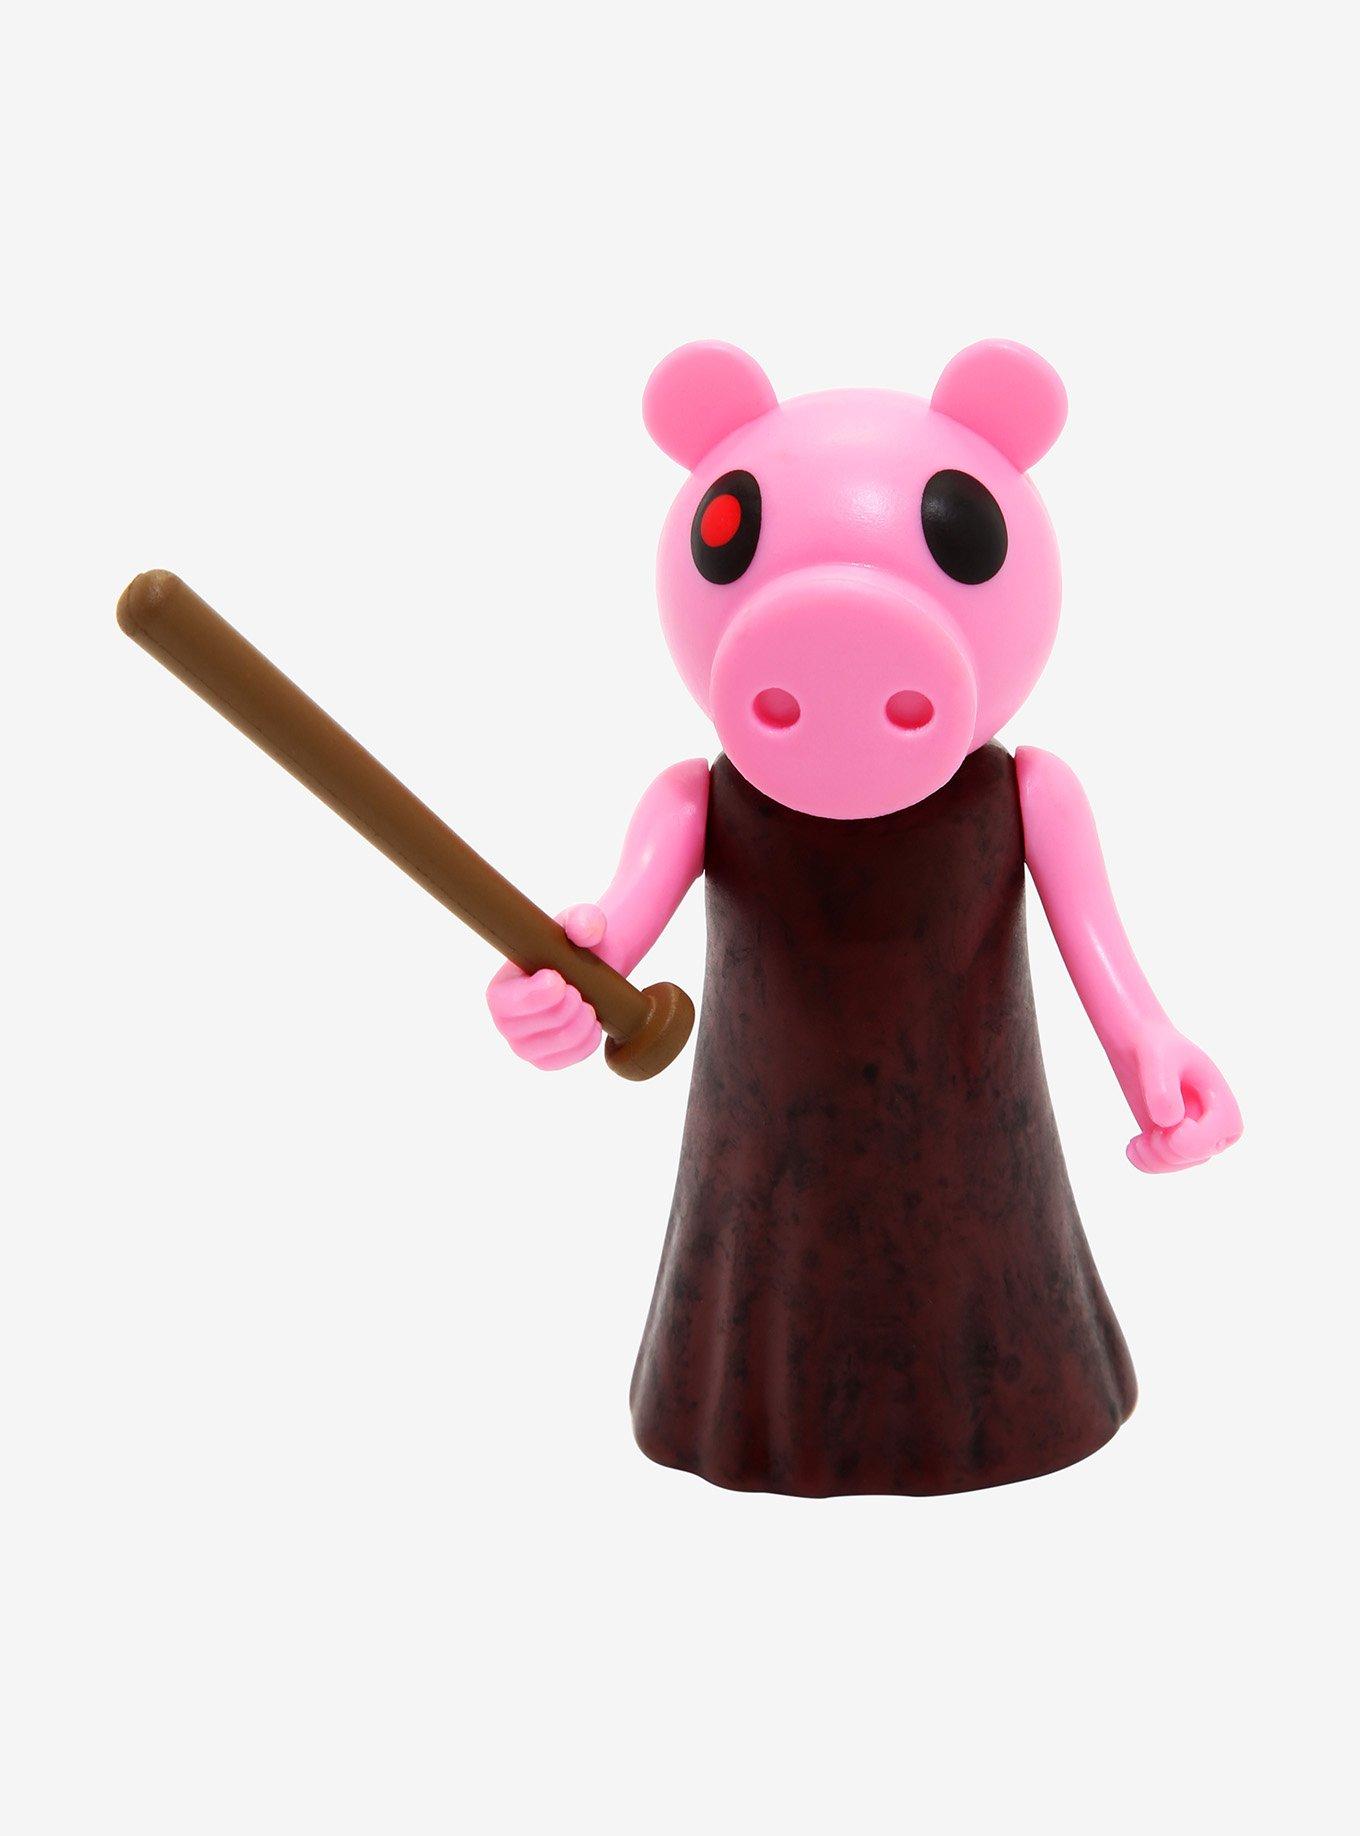 Piggy Action Figure Series 1 - Piggy